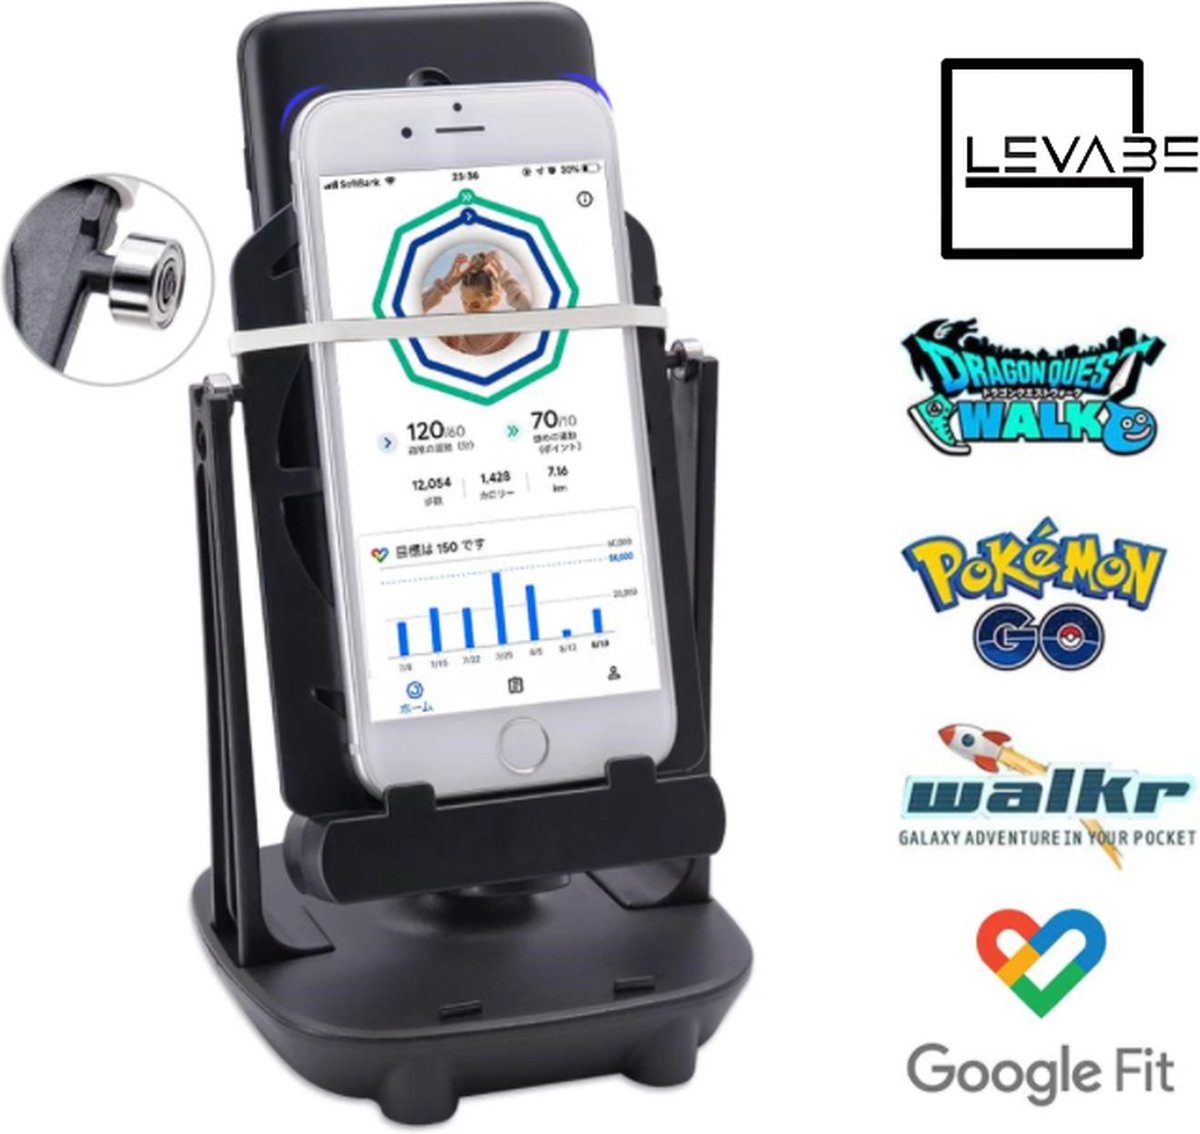 Levabe Automatische stappenteller voor O.a. Pokemon - telefoon shaker - egg hatch - pokemon go armband